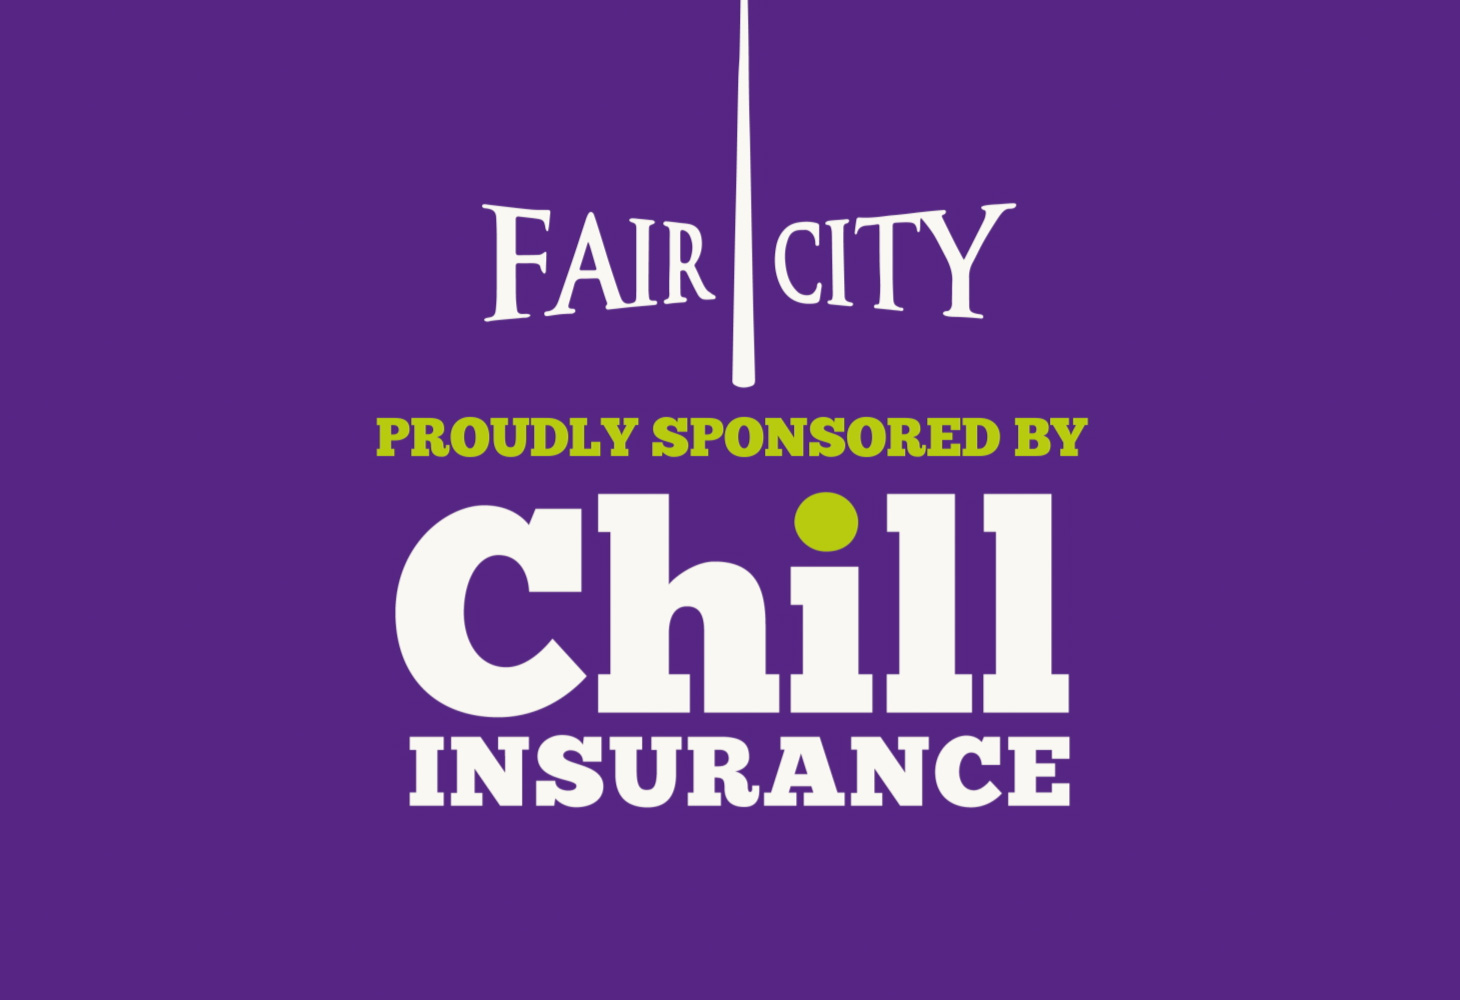 Chill - Fair City - LockUp